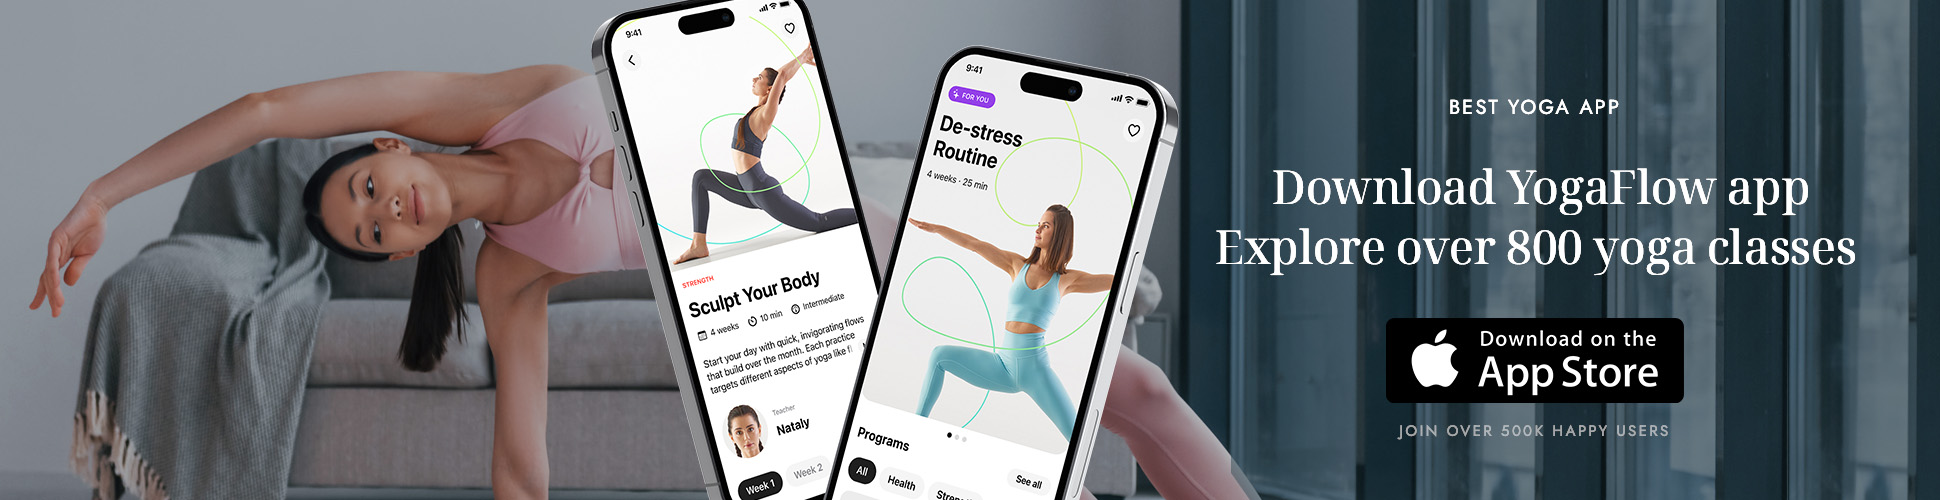 yoga app_banner